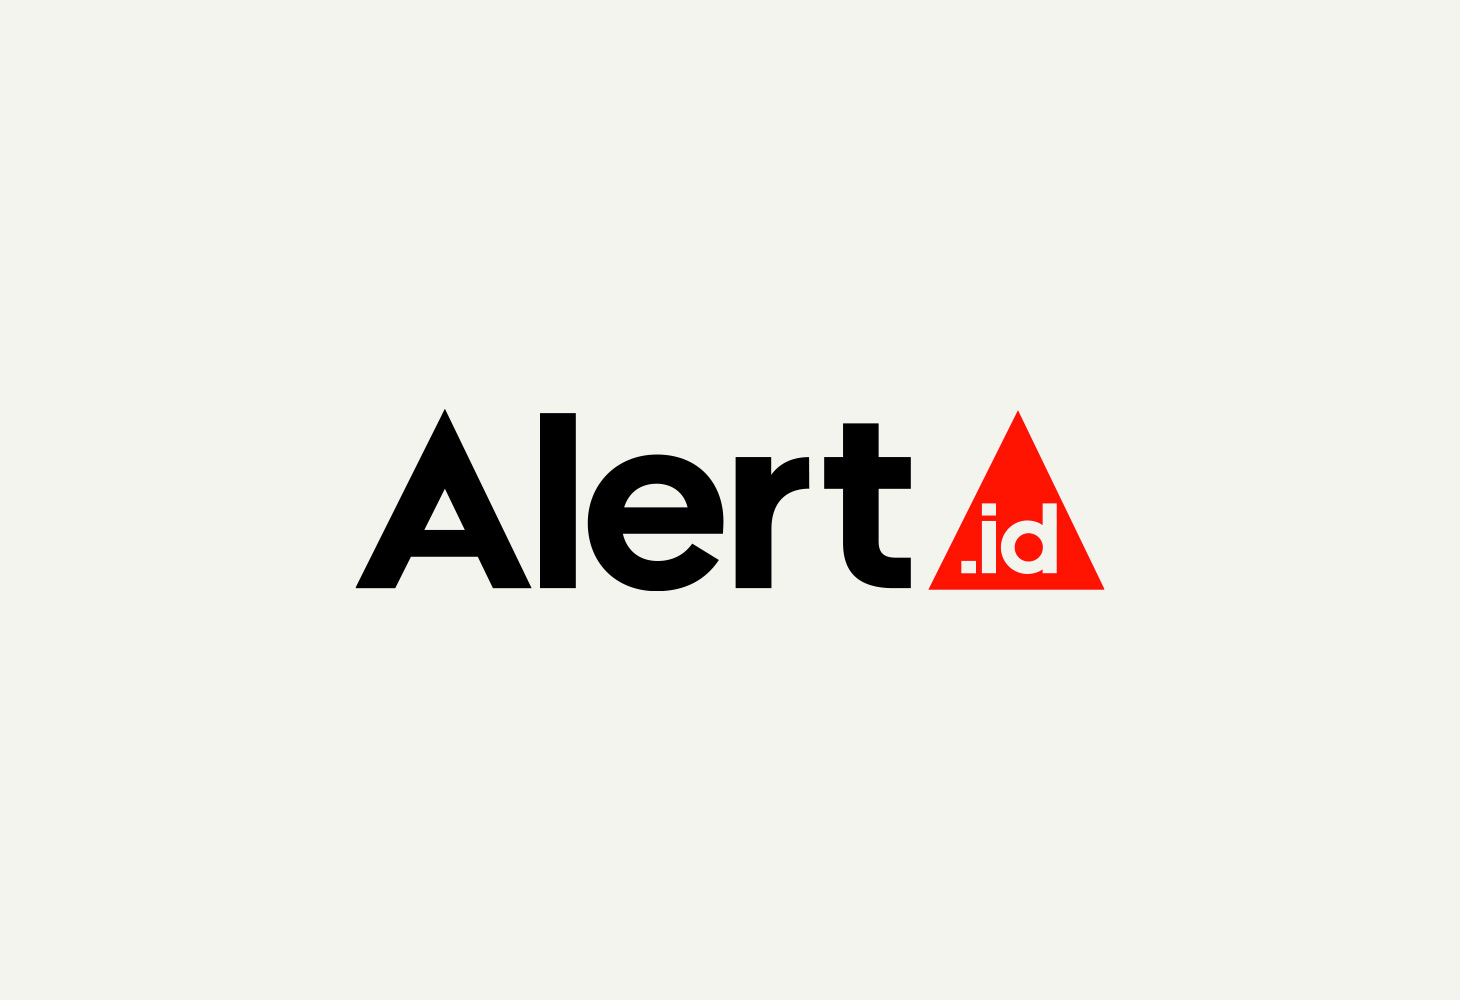 Alert.id — Logotype proper